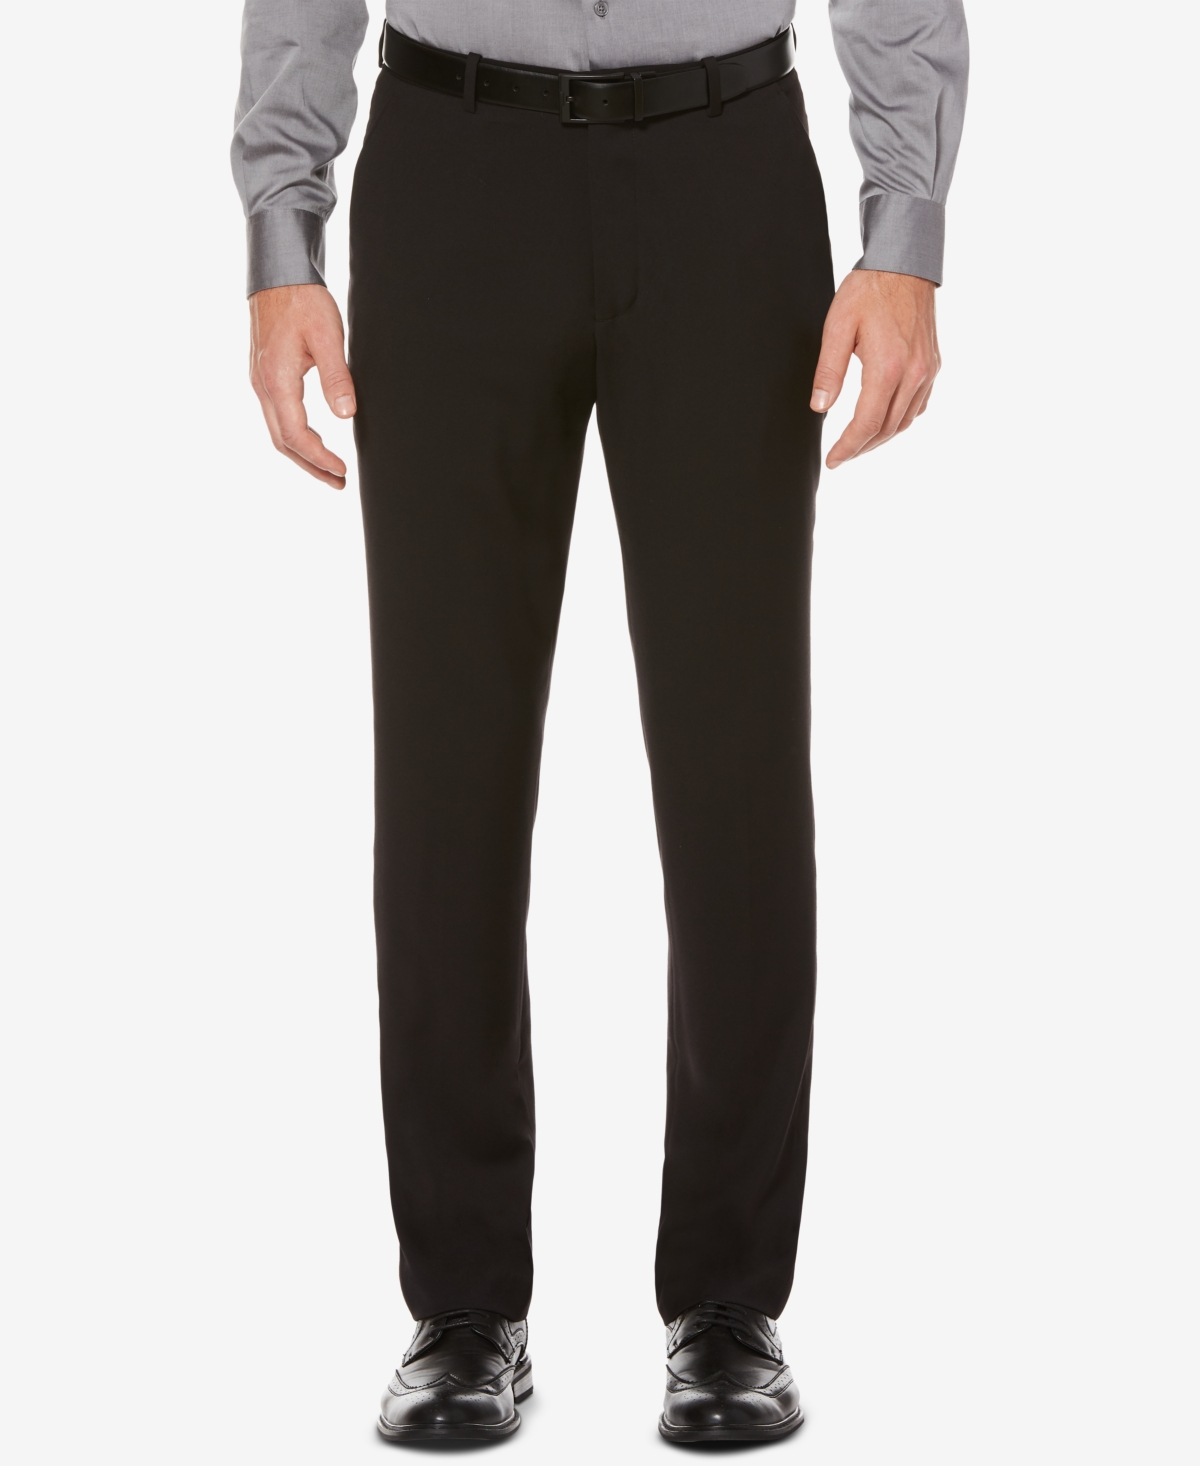 Men's Slim-Fit Dress Pants - Black